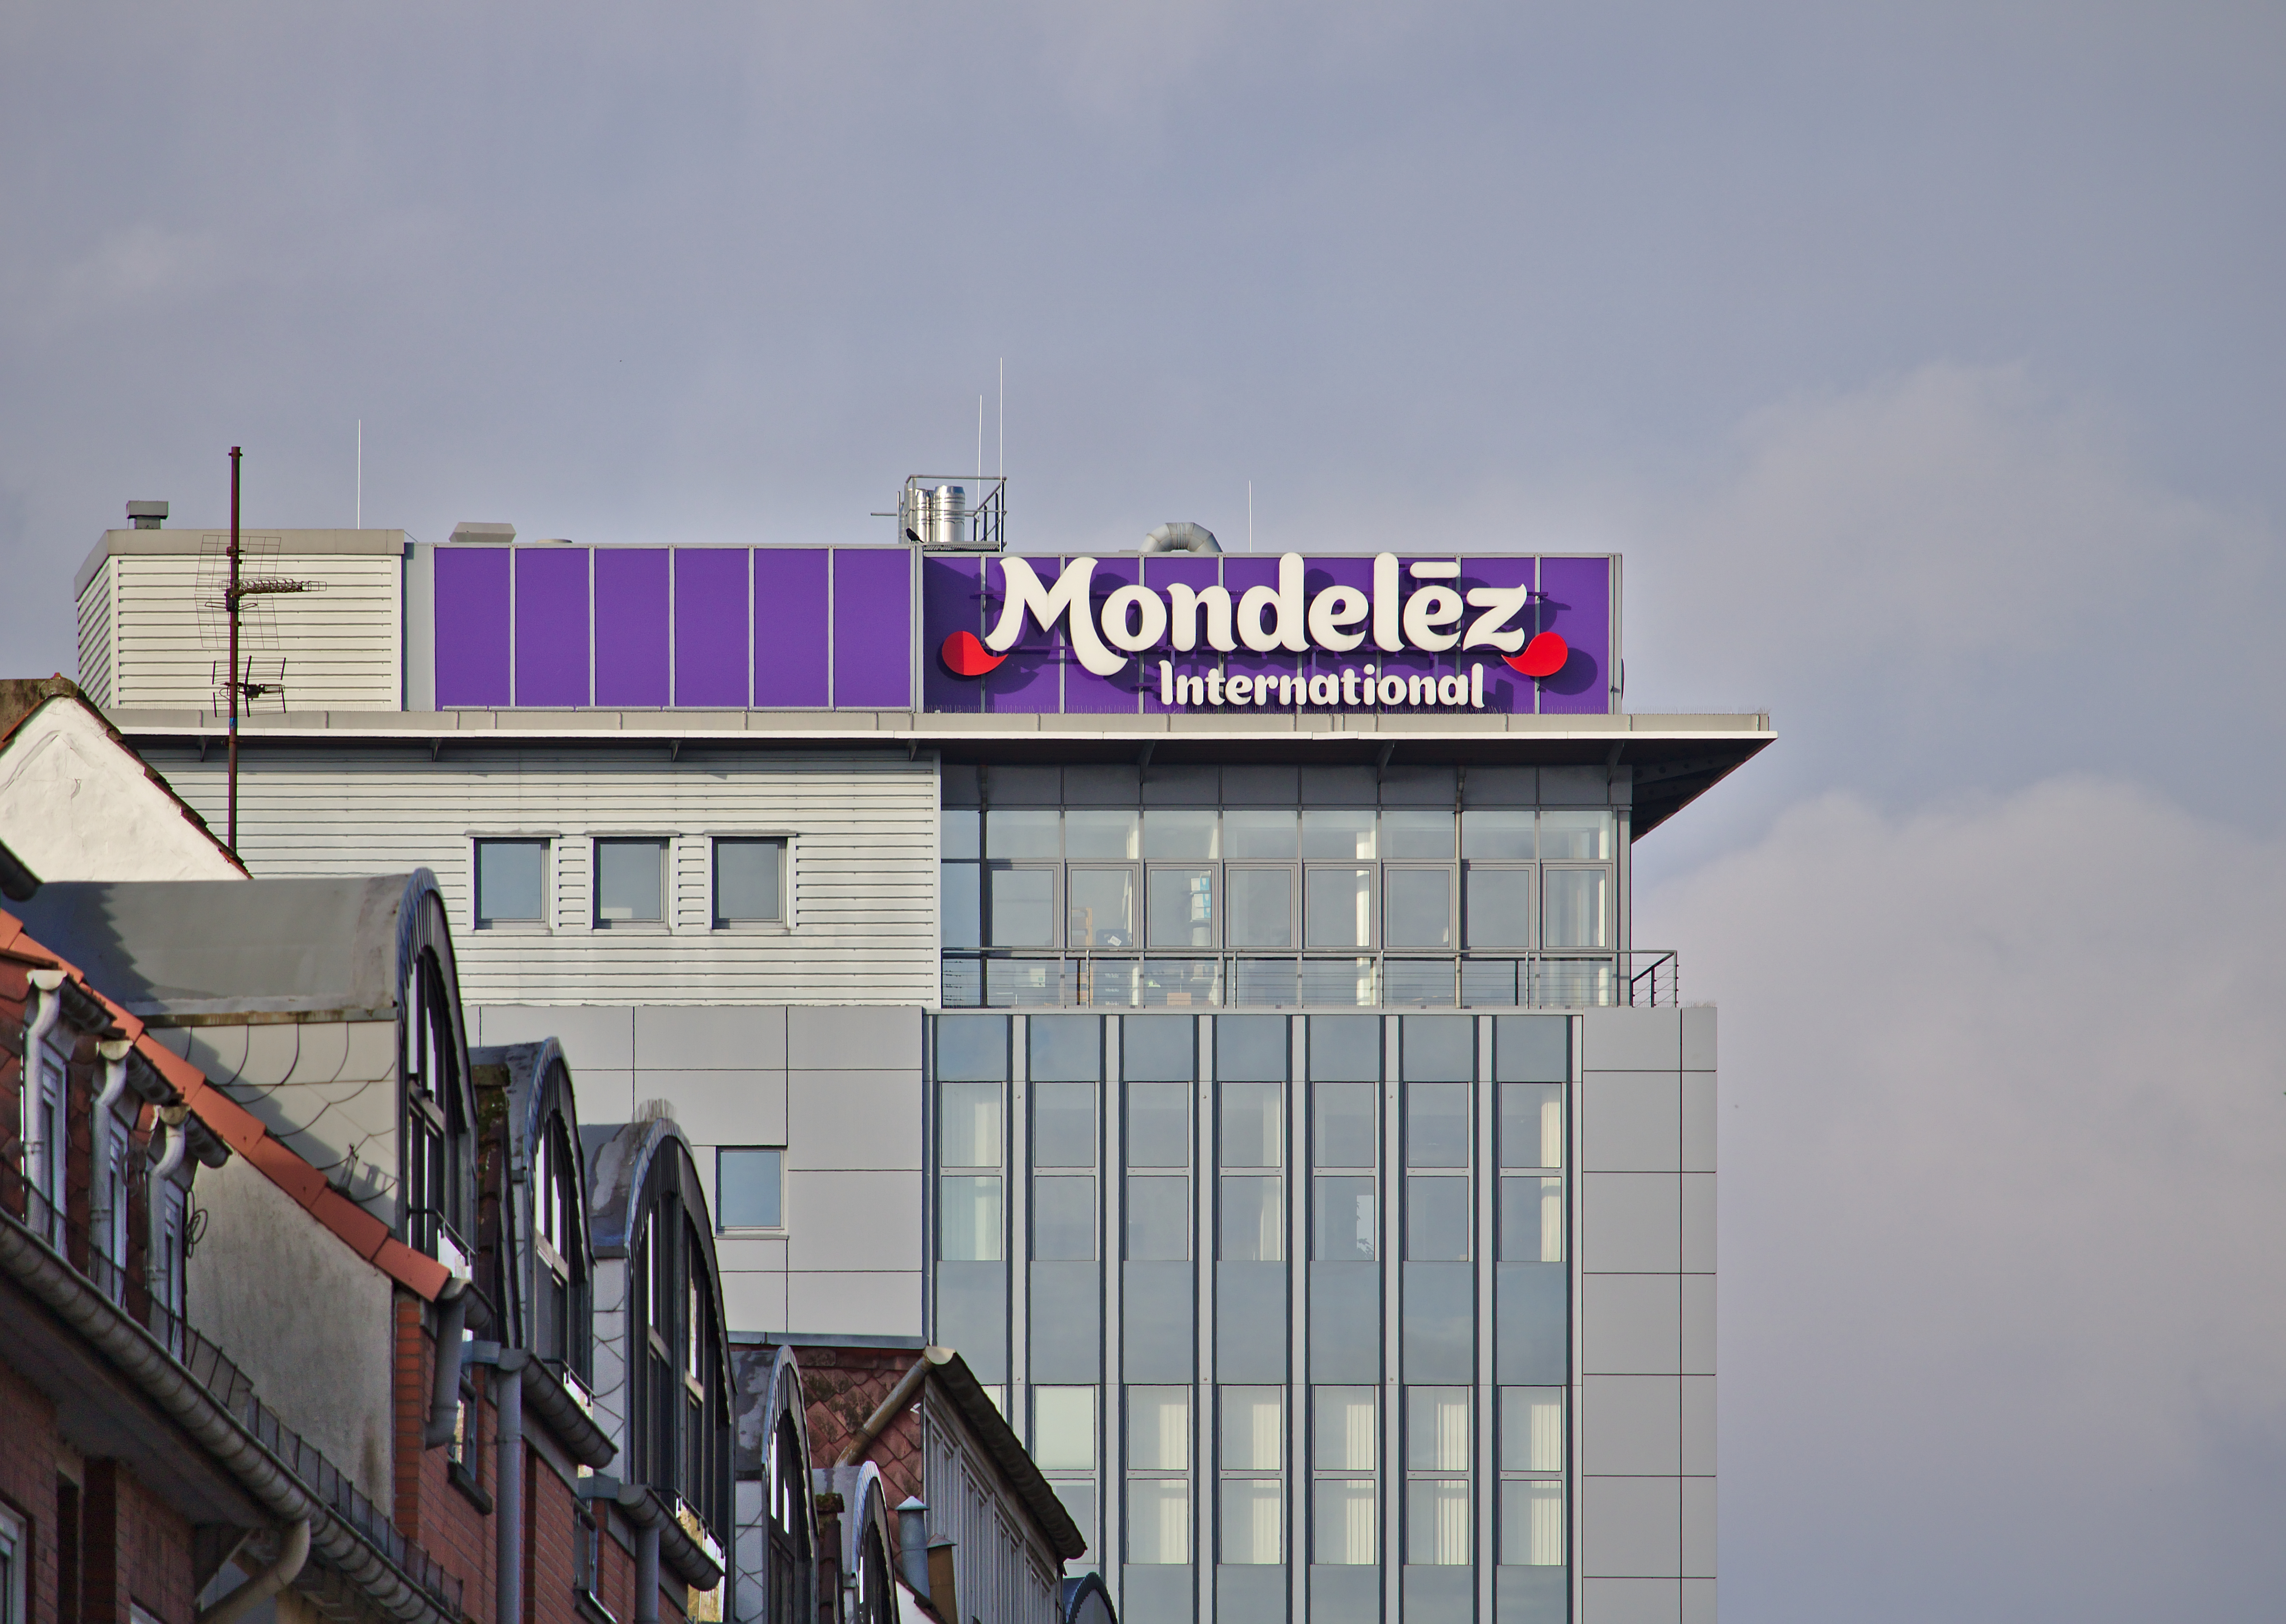 Bremen, Germany - November 11th, 2017 - Mondelez Germany headquarters building with large company logo